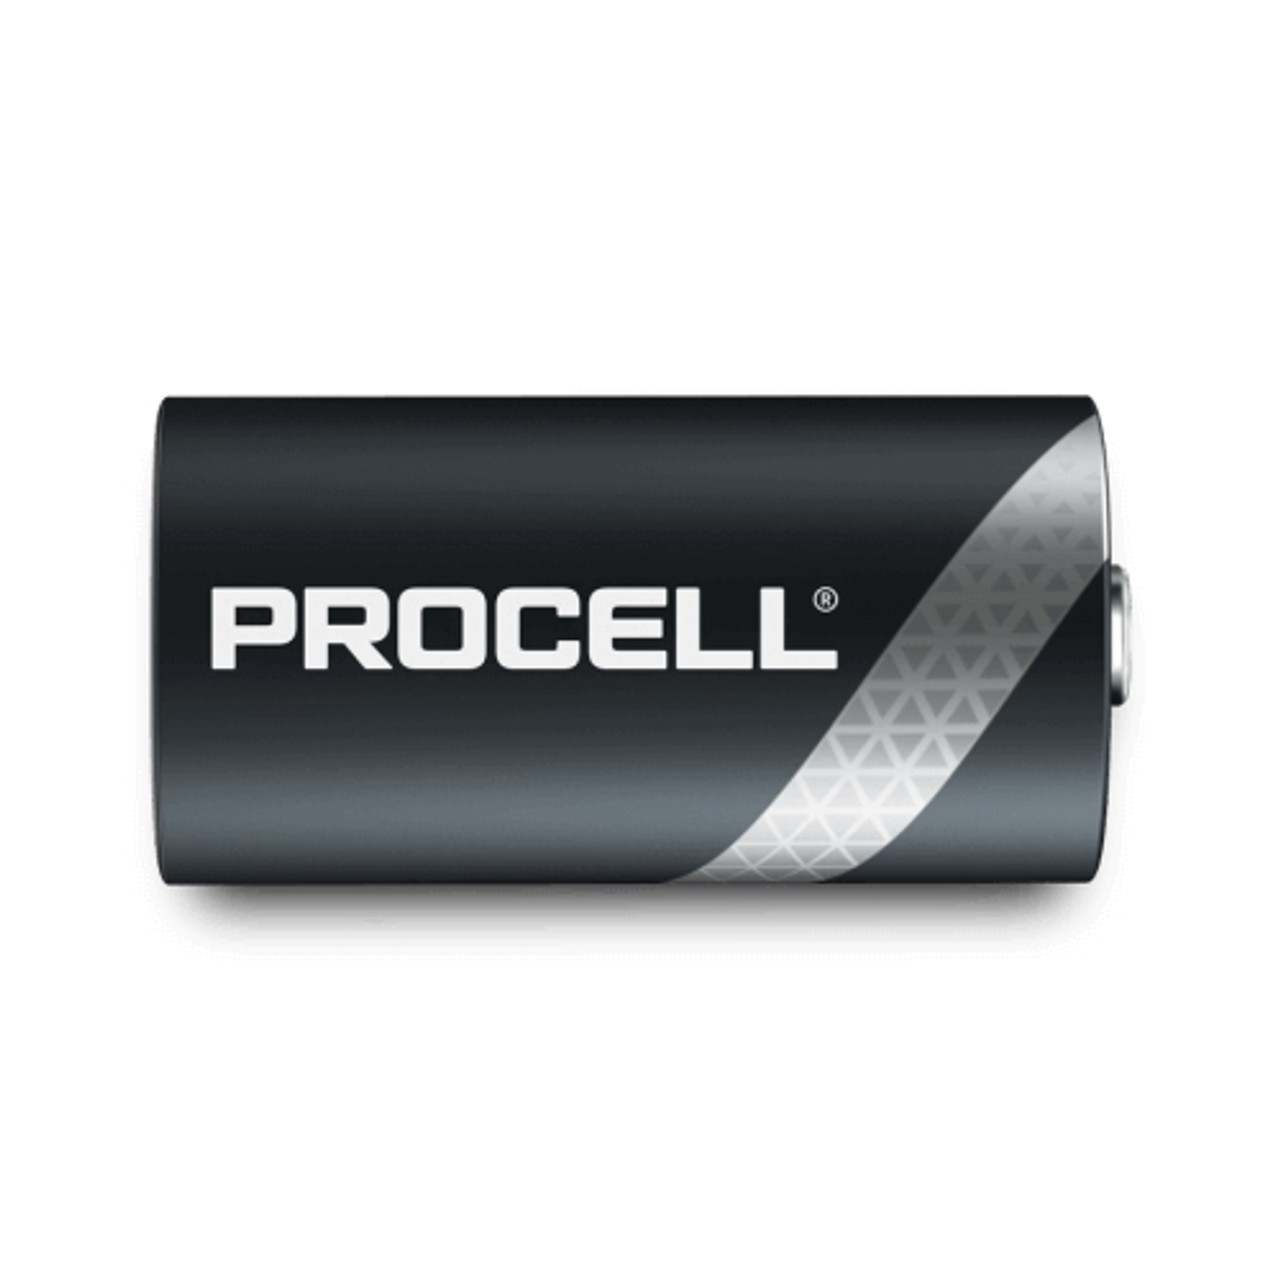 Duracell Procell Intense CR123 3 volt Lithium Battery 12 per box